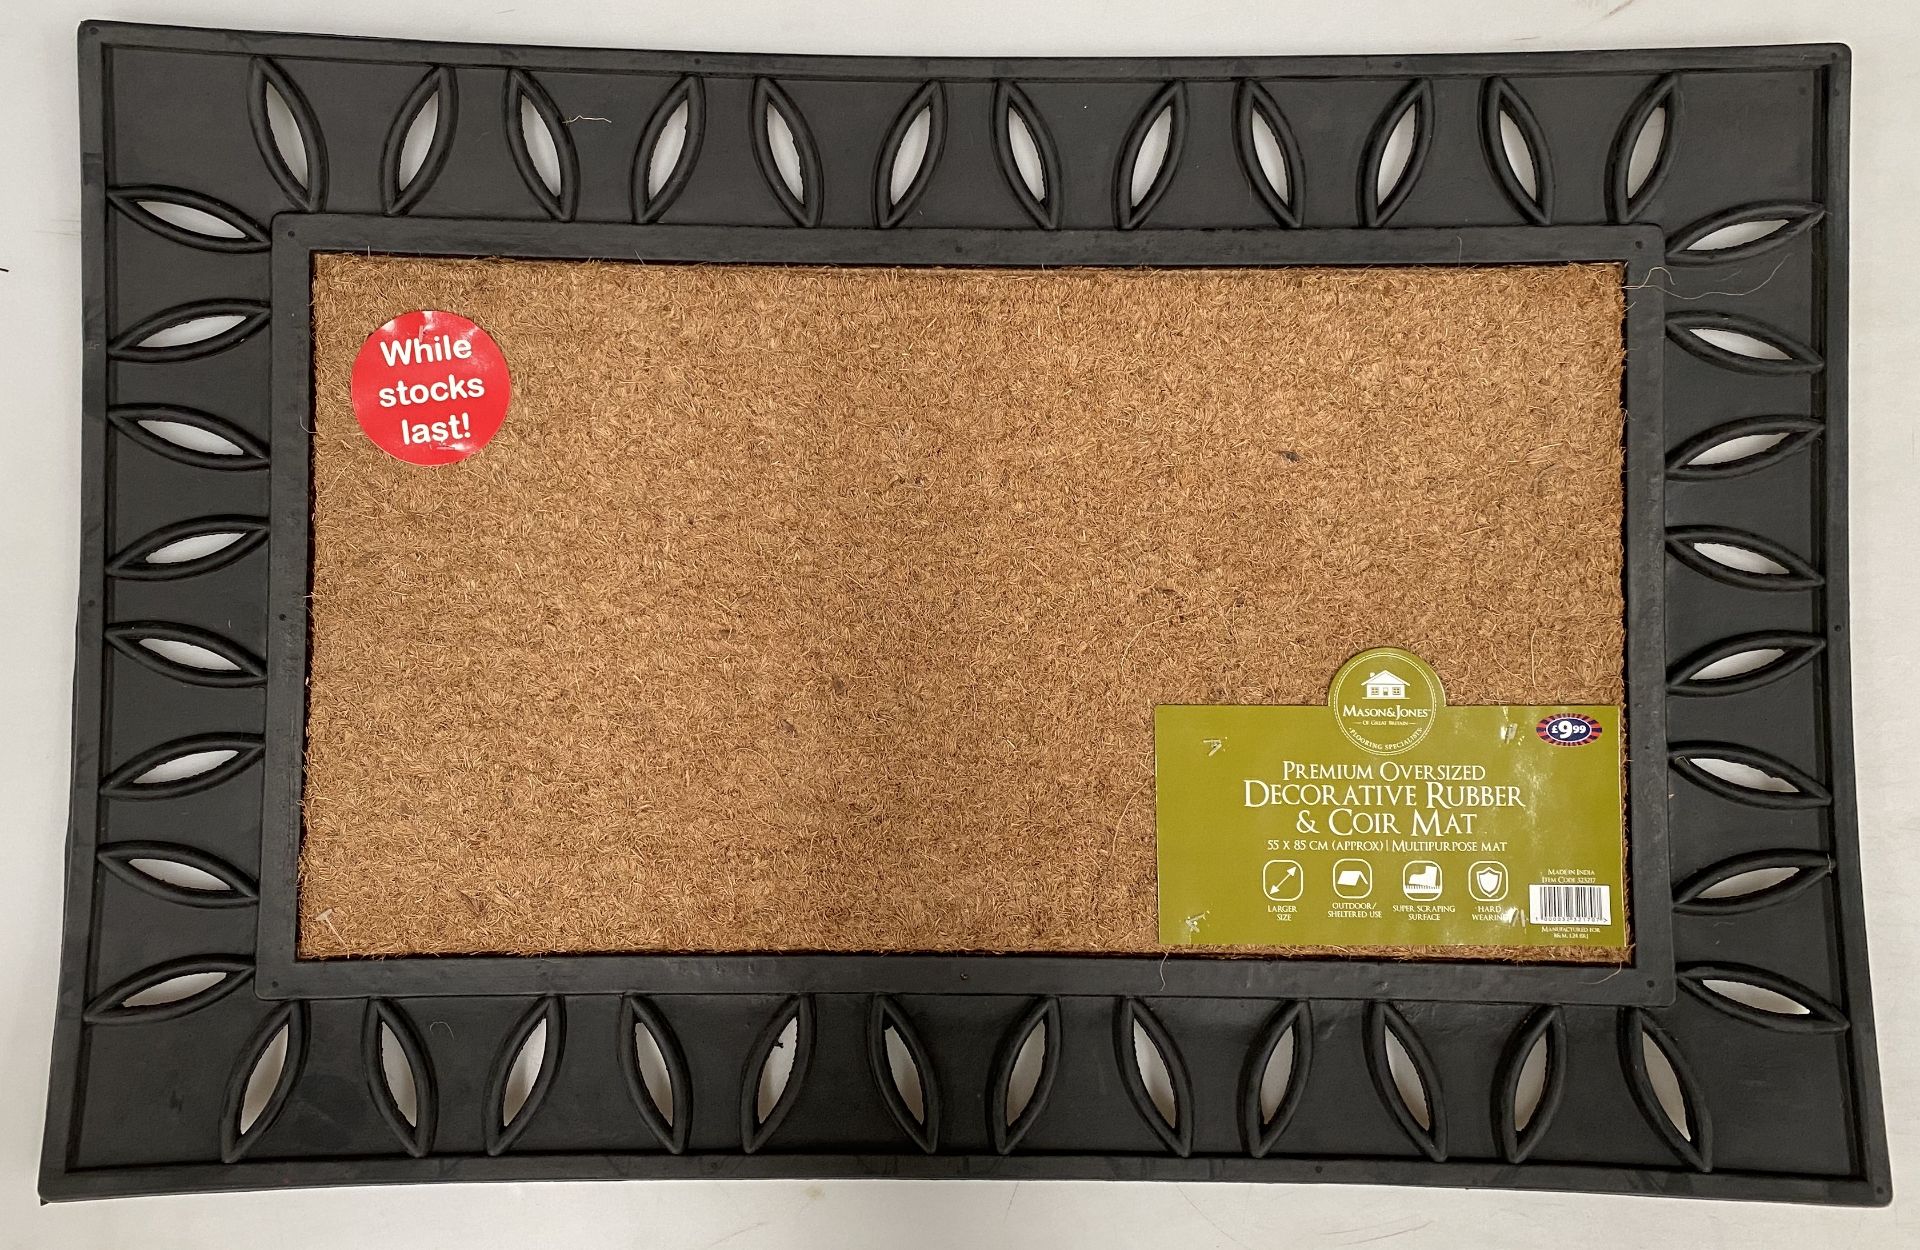 6 x Mason & Jones Premium Oversized Decorative Rubber & Coir Doormats - 55cm x 85cm